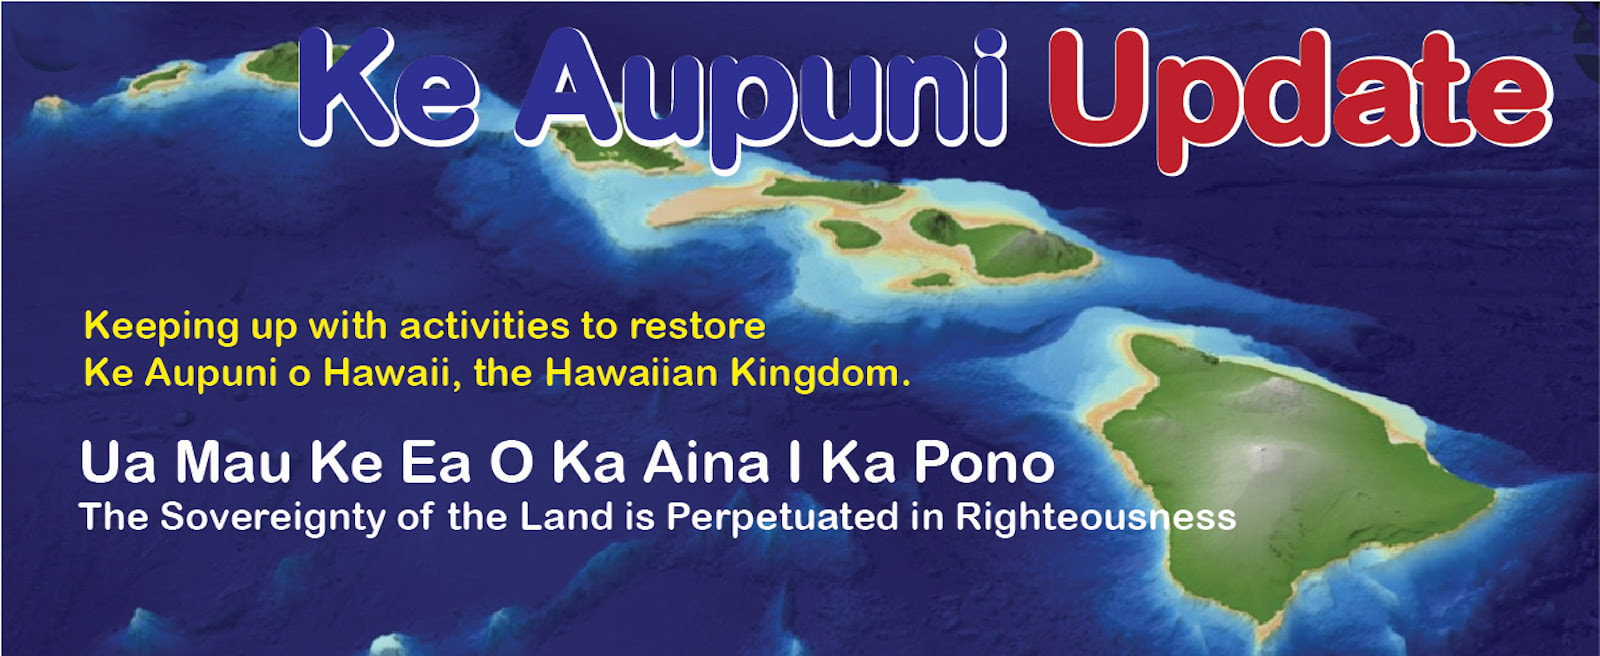 Ke Aupuni update from the Hawaiian Kingdom